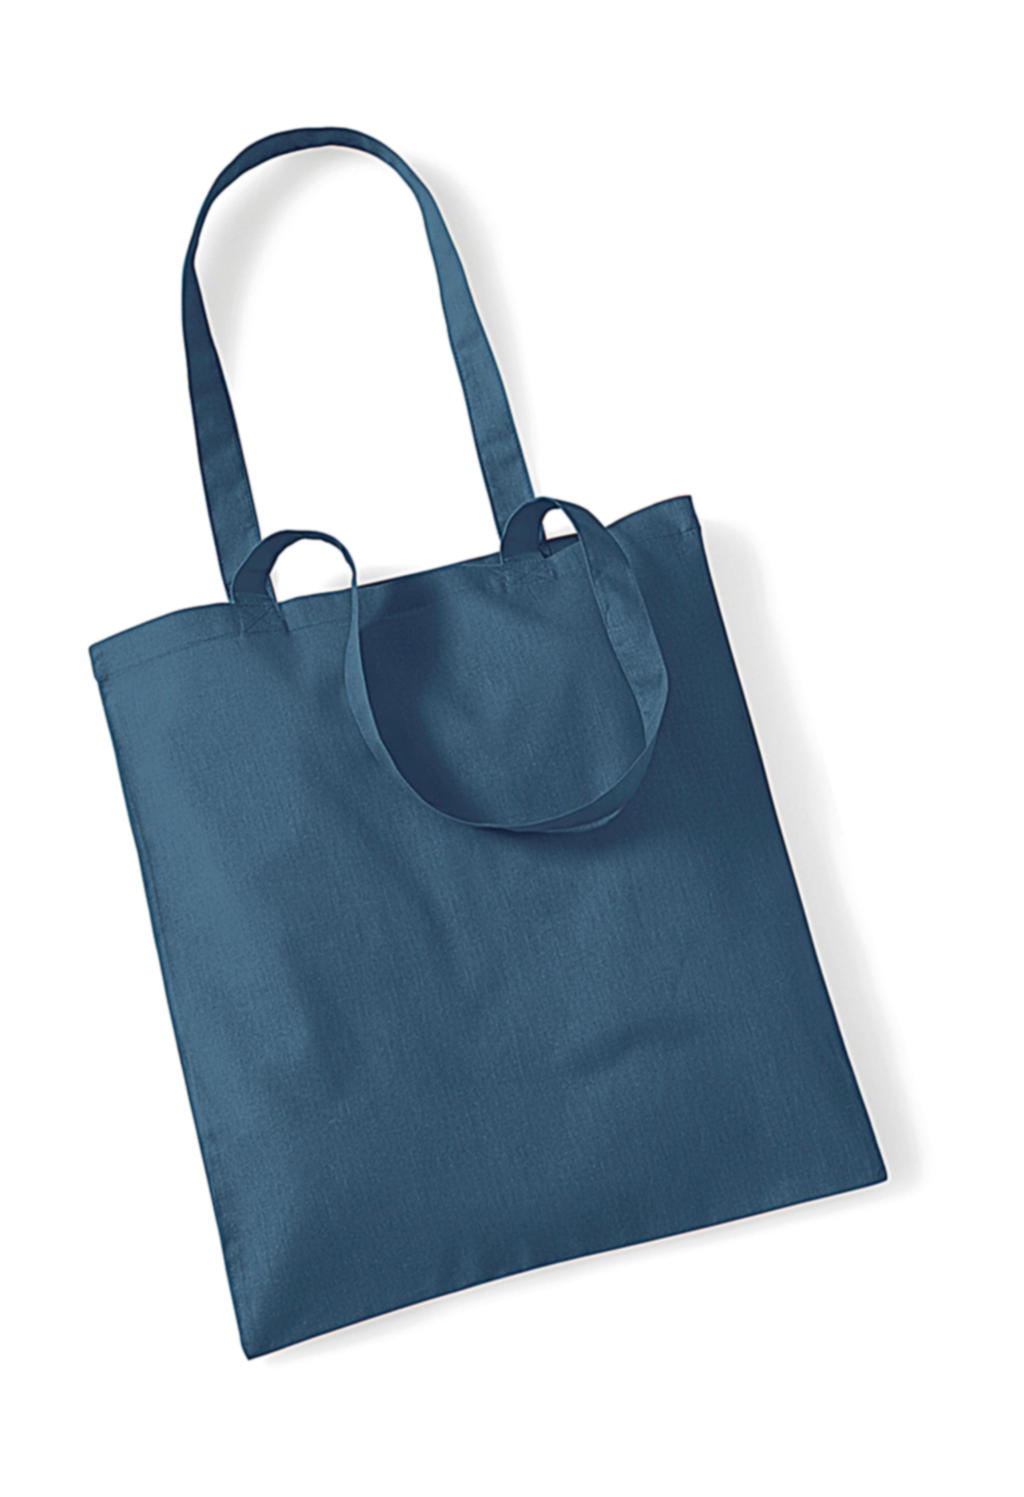 Westford mill - bag for life - long handles - 601. 28